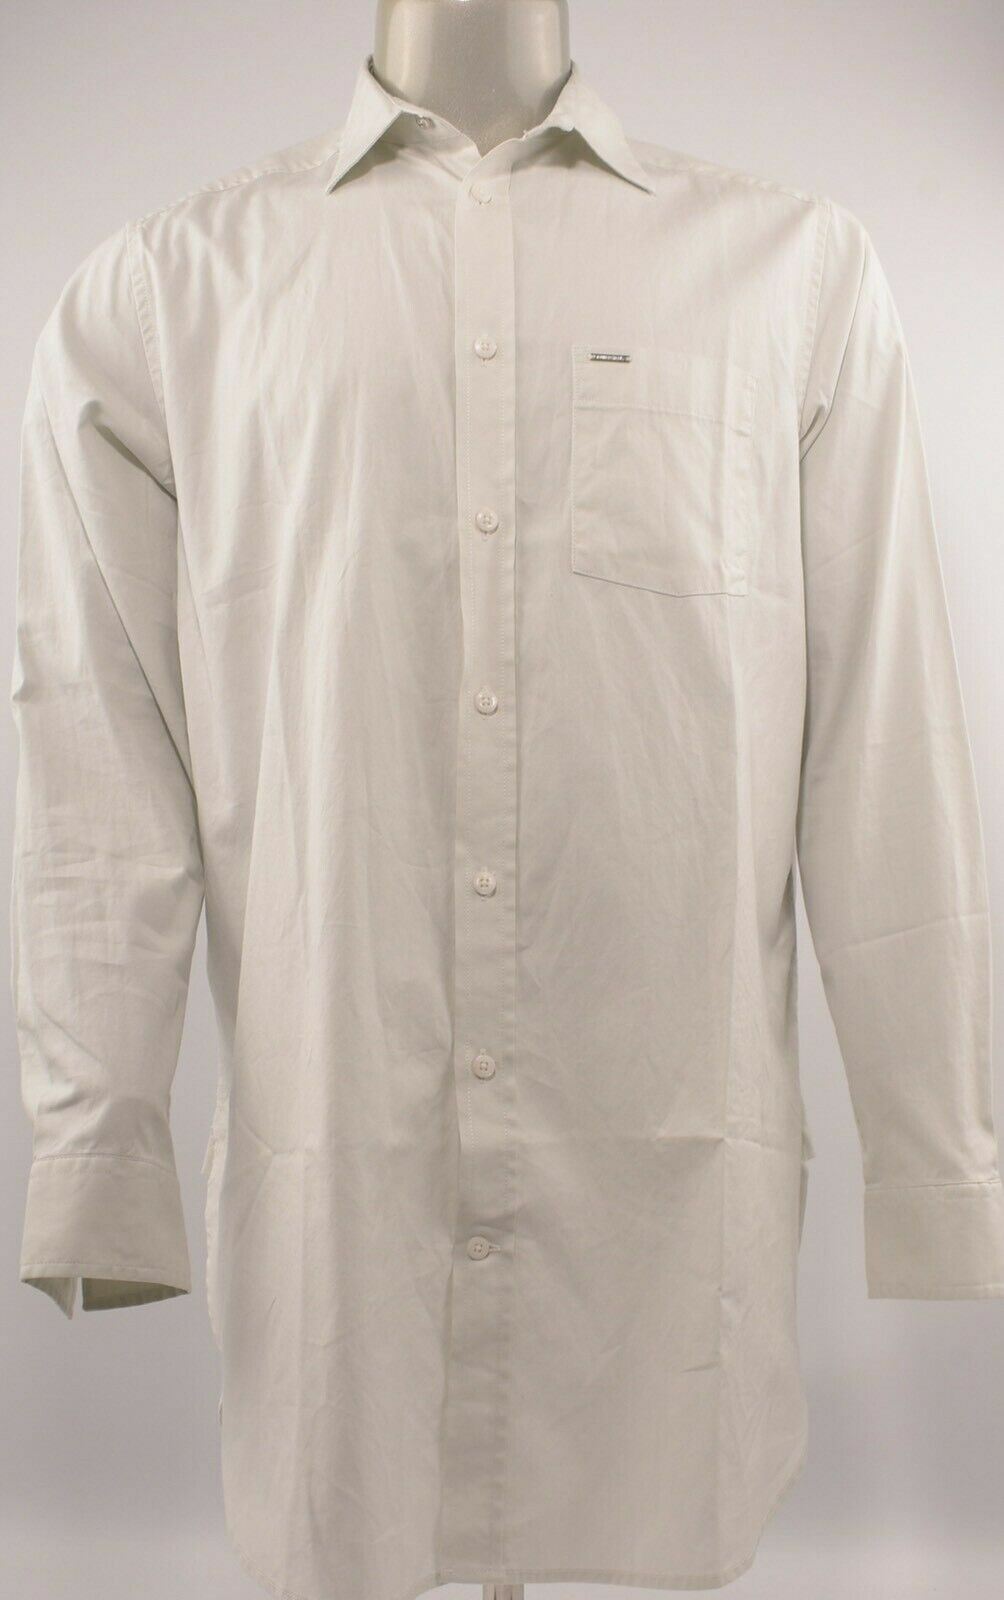 DIESEL Men's S-FILT Cotton Long Sleeve Shirt, Light Pastel Green, size Small